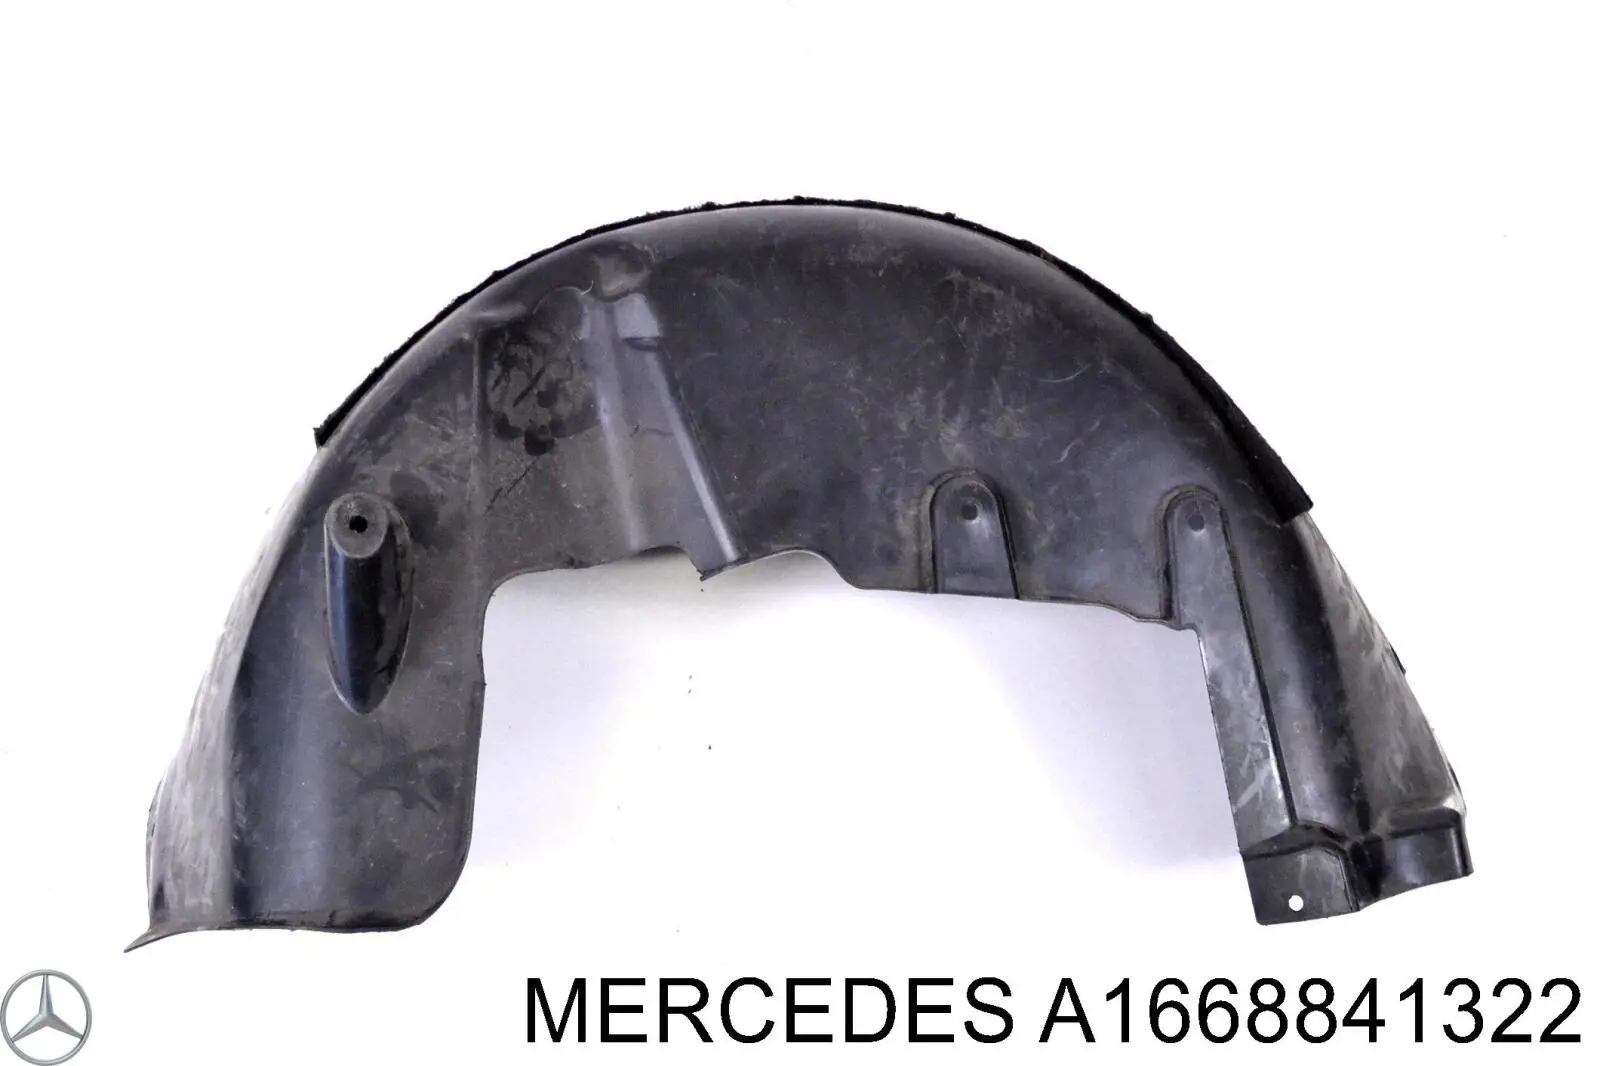 A1668841322 Mercedes guardabarros interior, aleta trasera, izquierdo